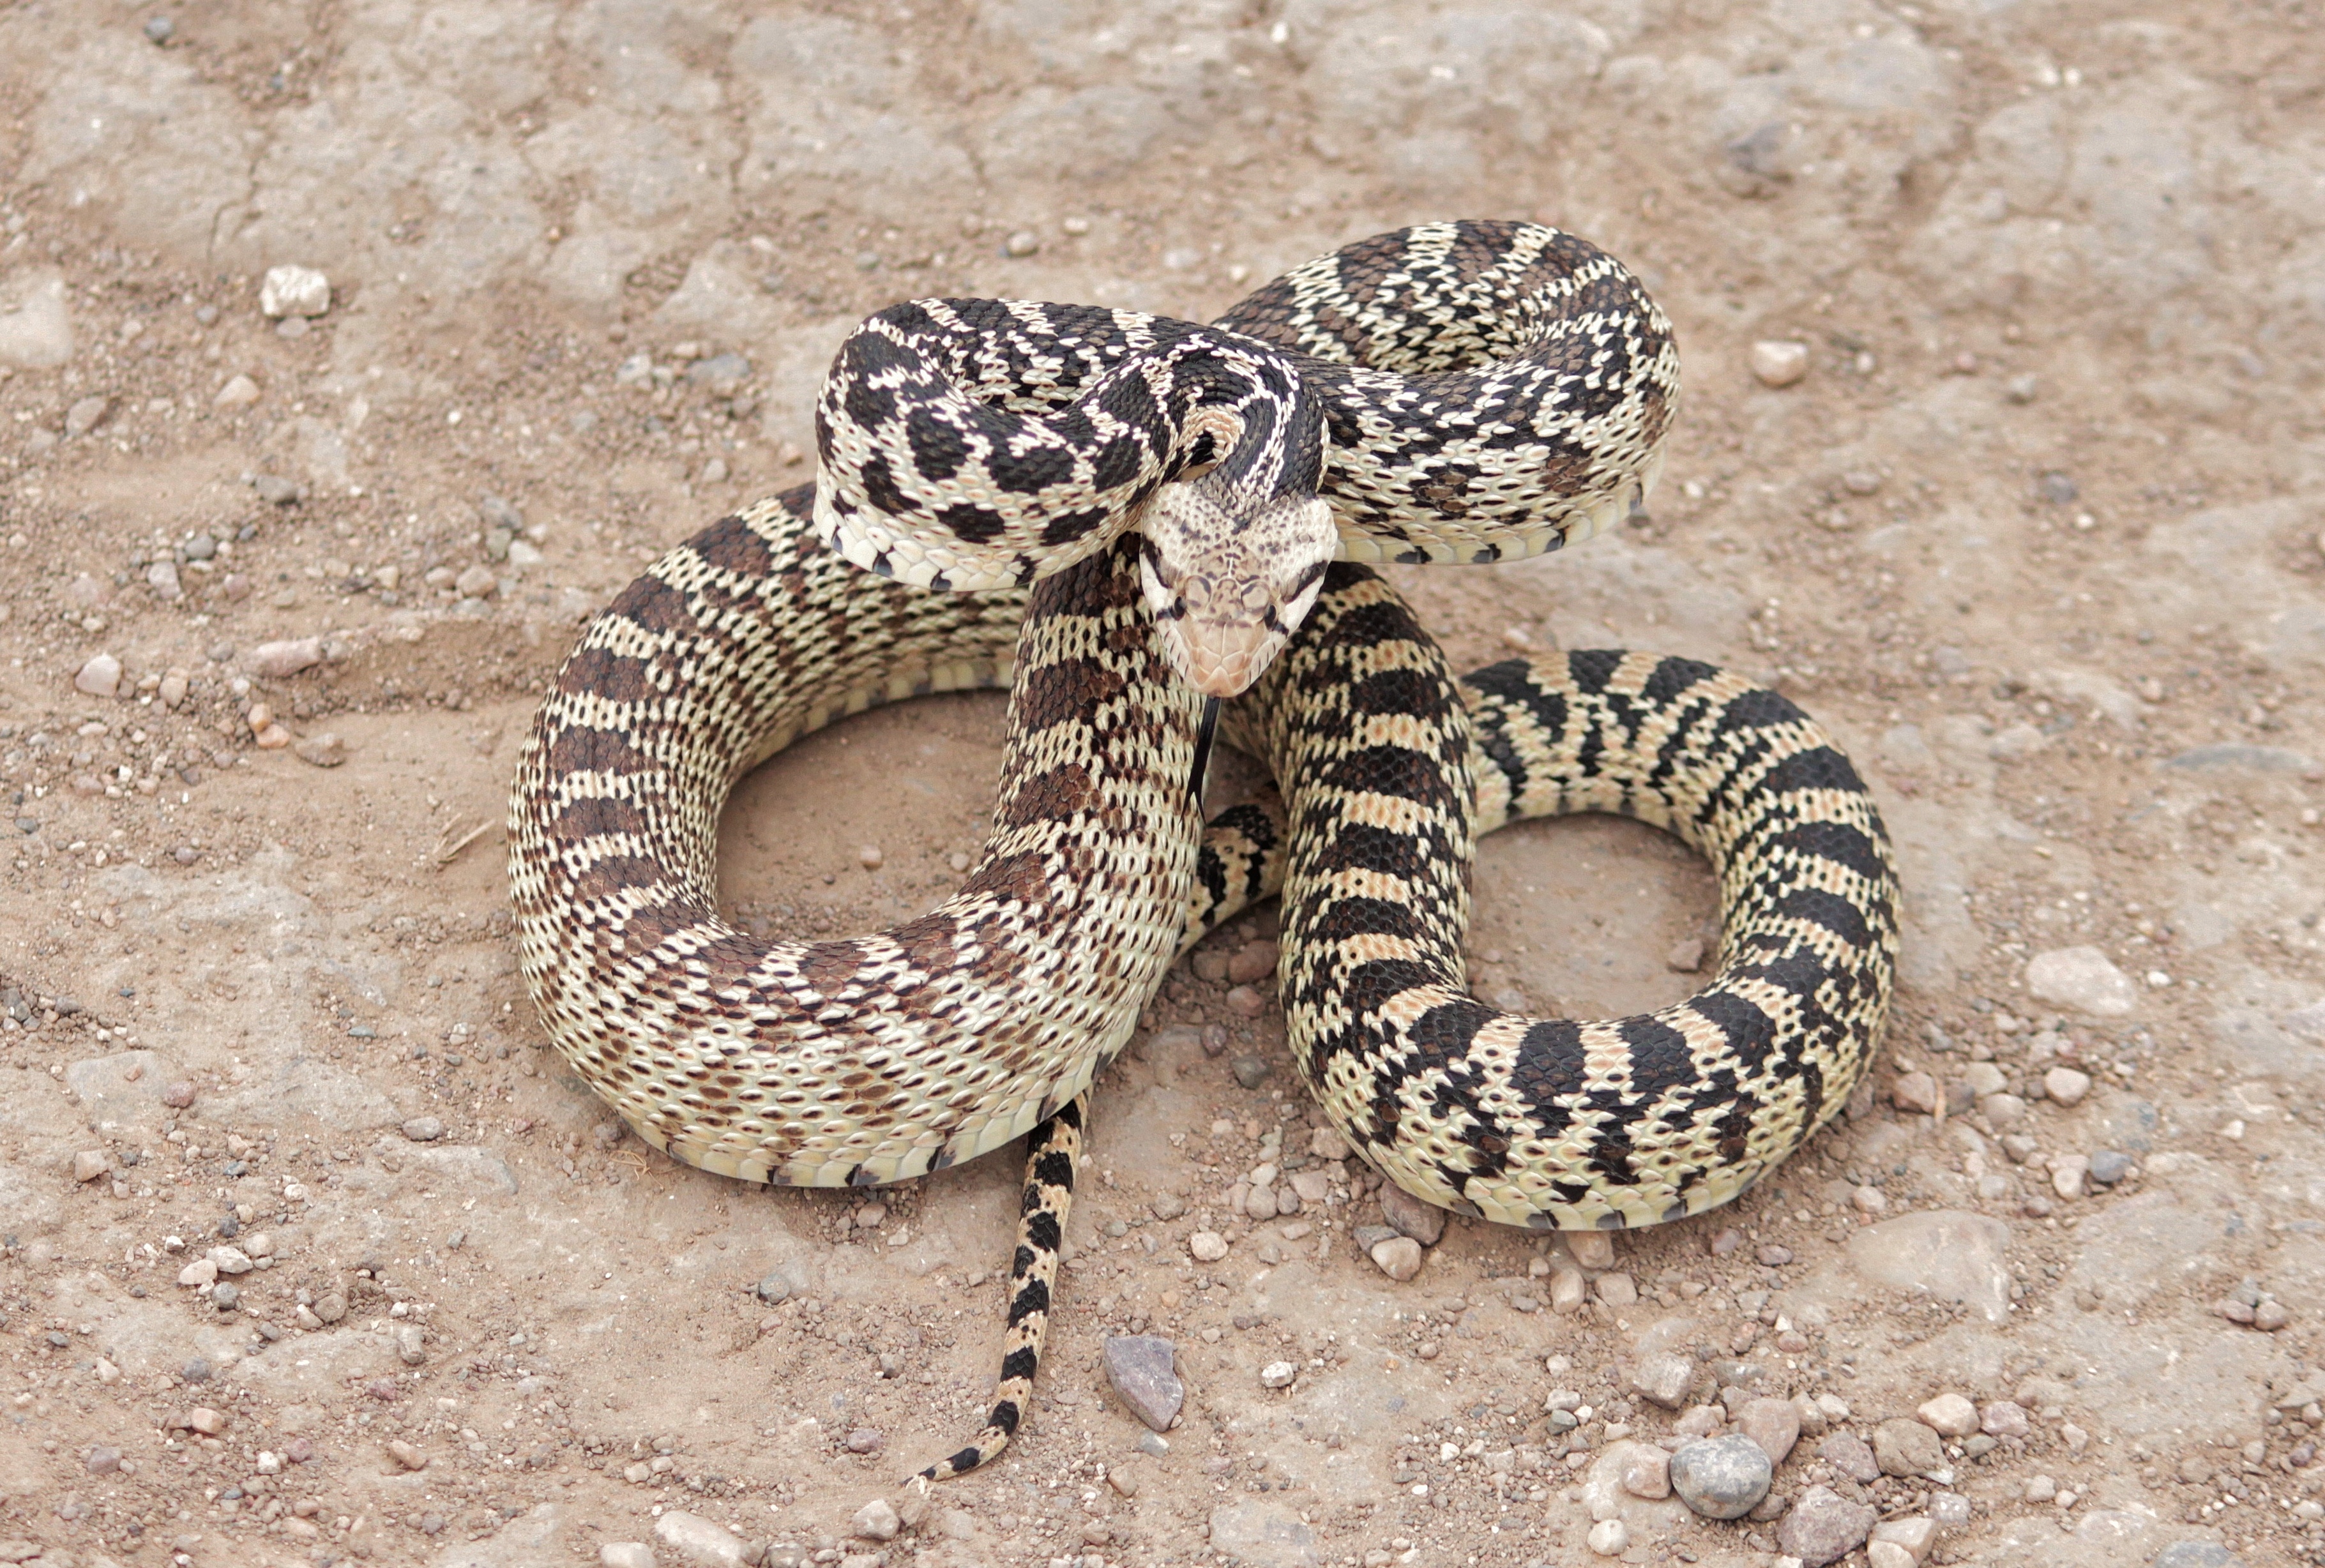 A gopher snake imitating a rattlesnake.